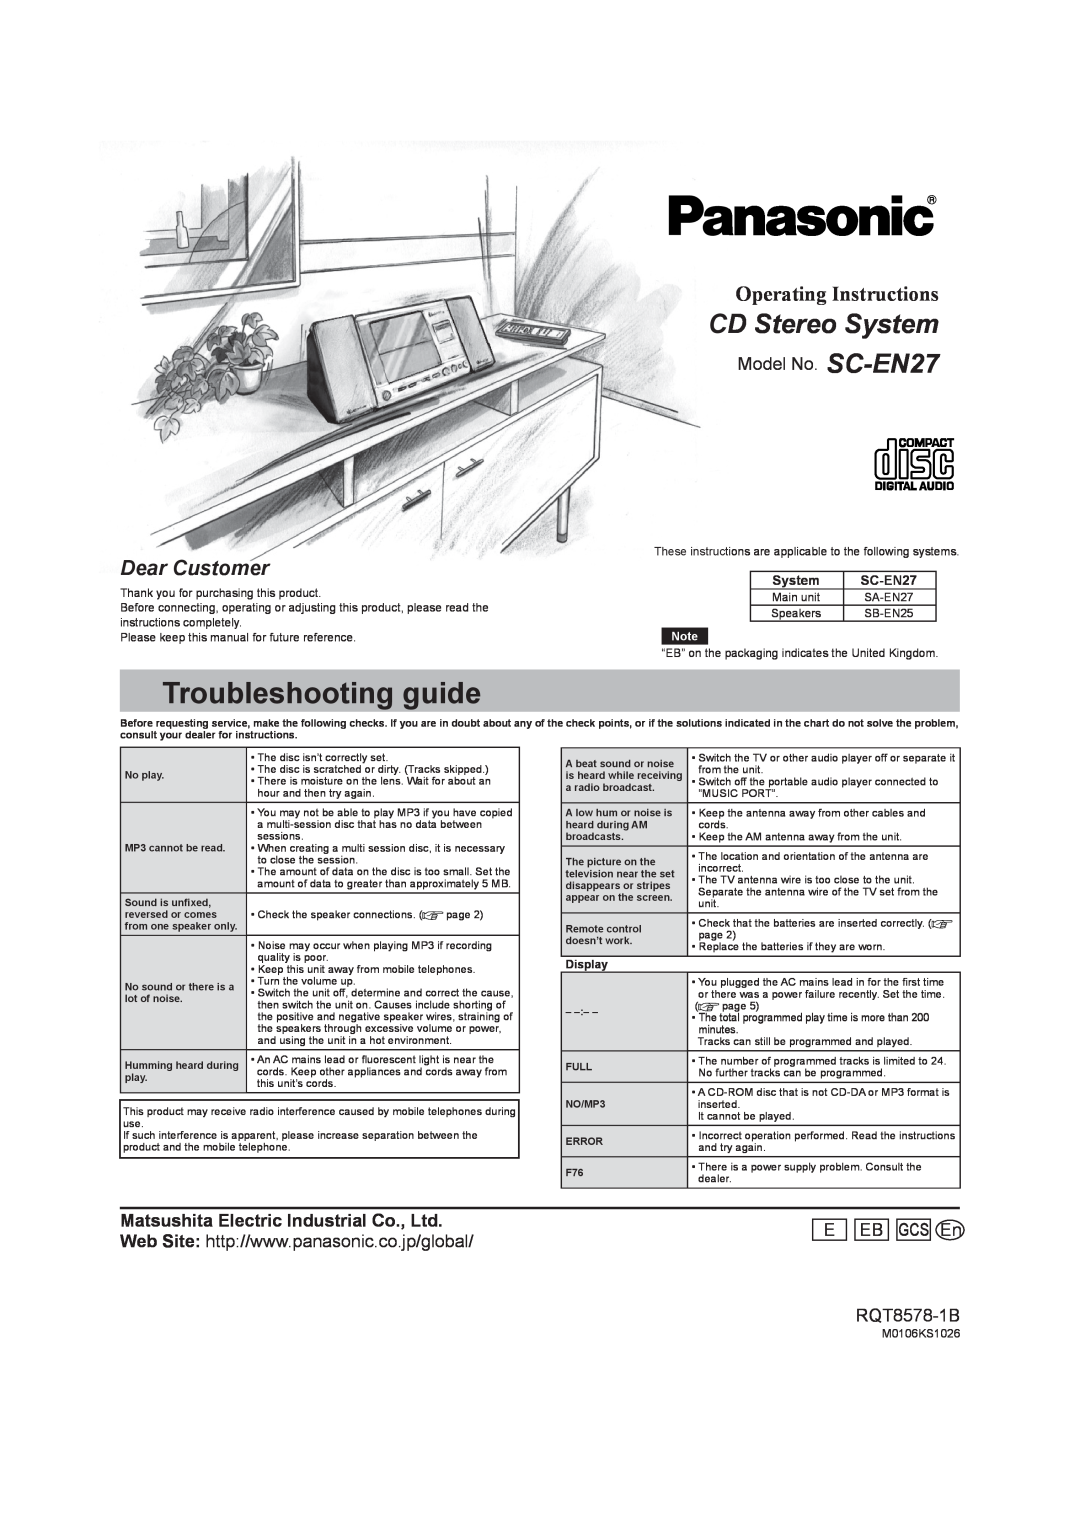 Panasonic SC-EN26 warranty Troubleshooting guide, System, SC-EN25, SC-EN27, Panasonic Consumer Electronics 